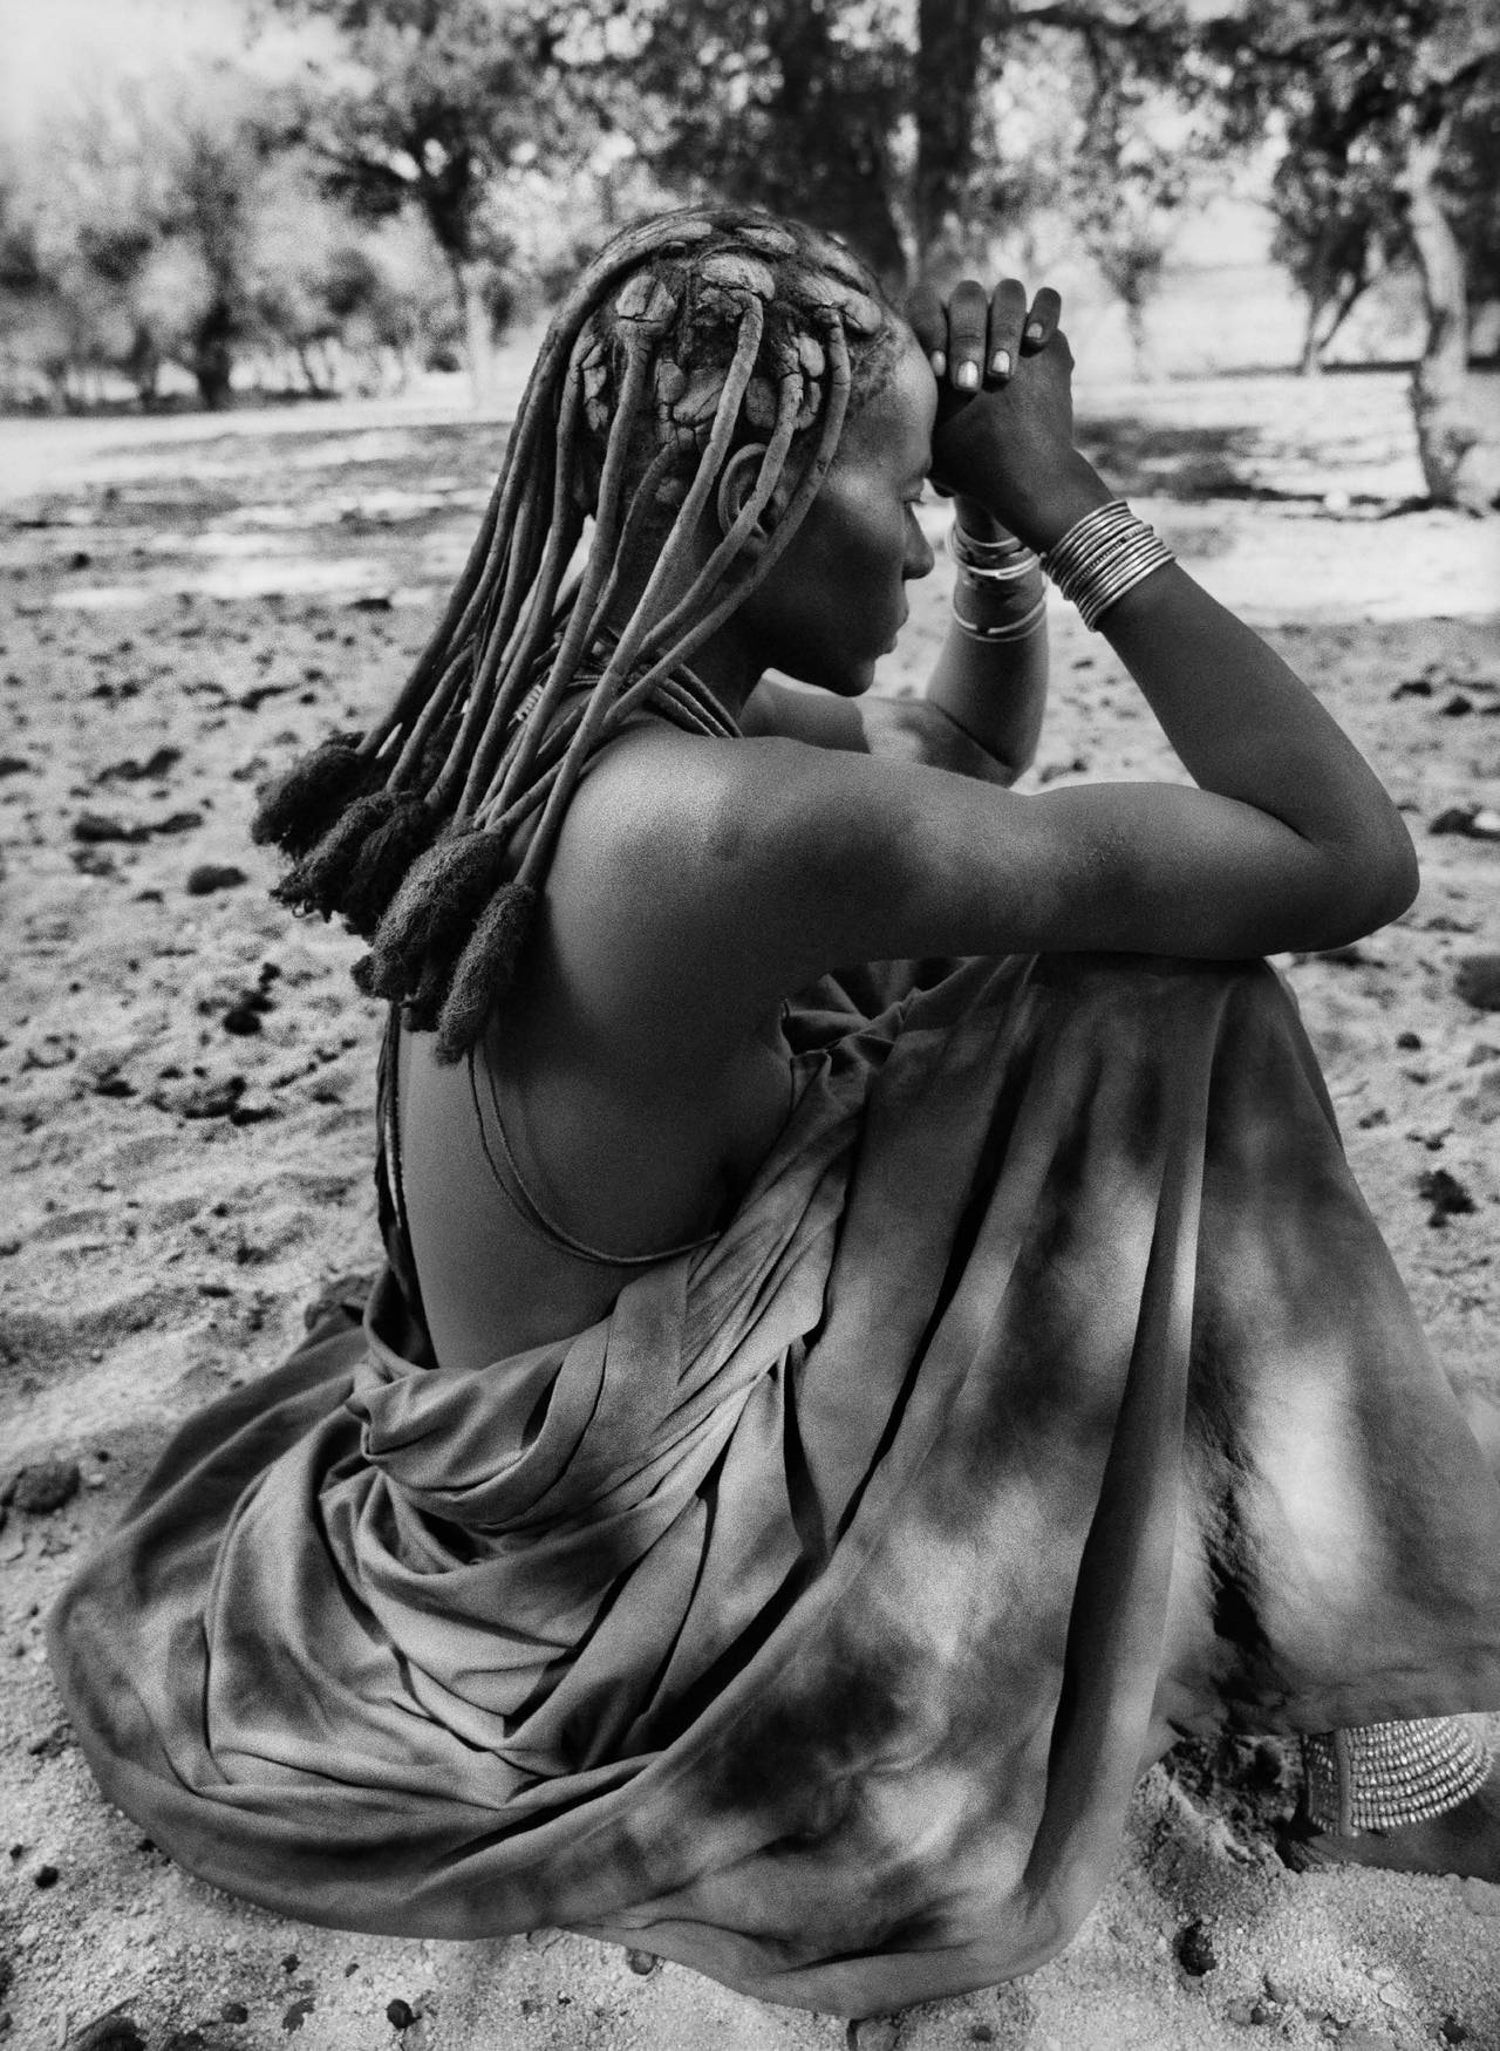 Женщина народности химба, Намибия, 2005. Автор Себастьян Сальгадо